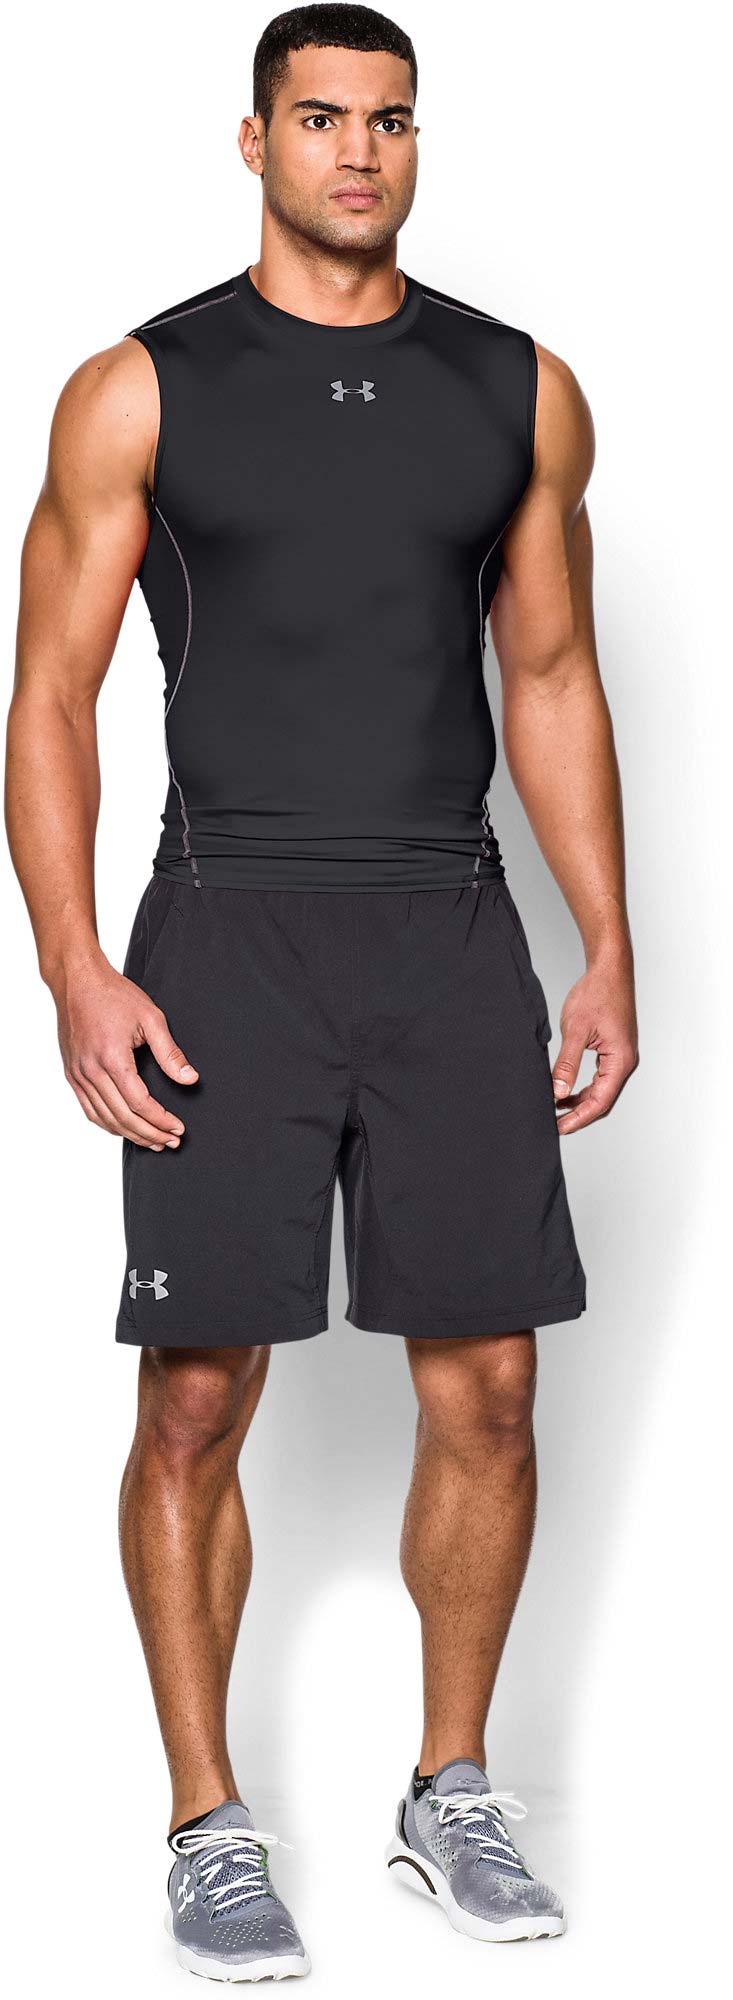 Men’s compression sleeveless top